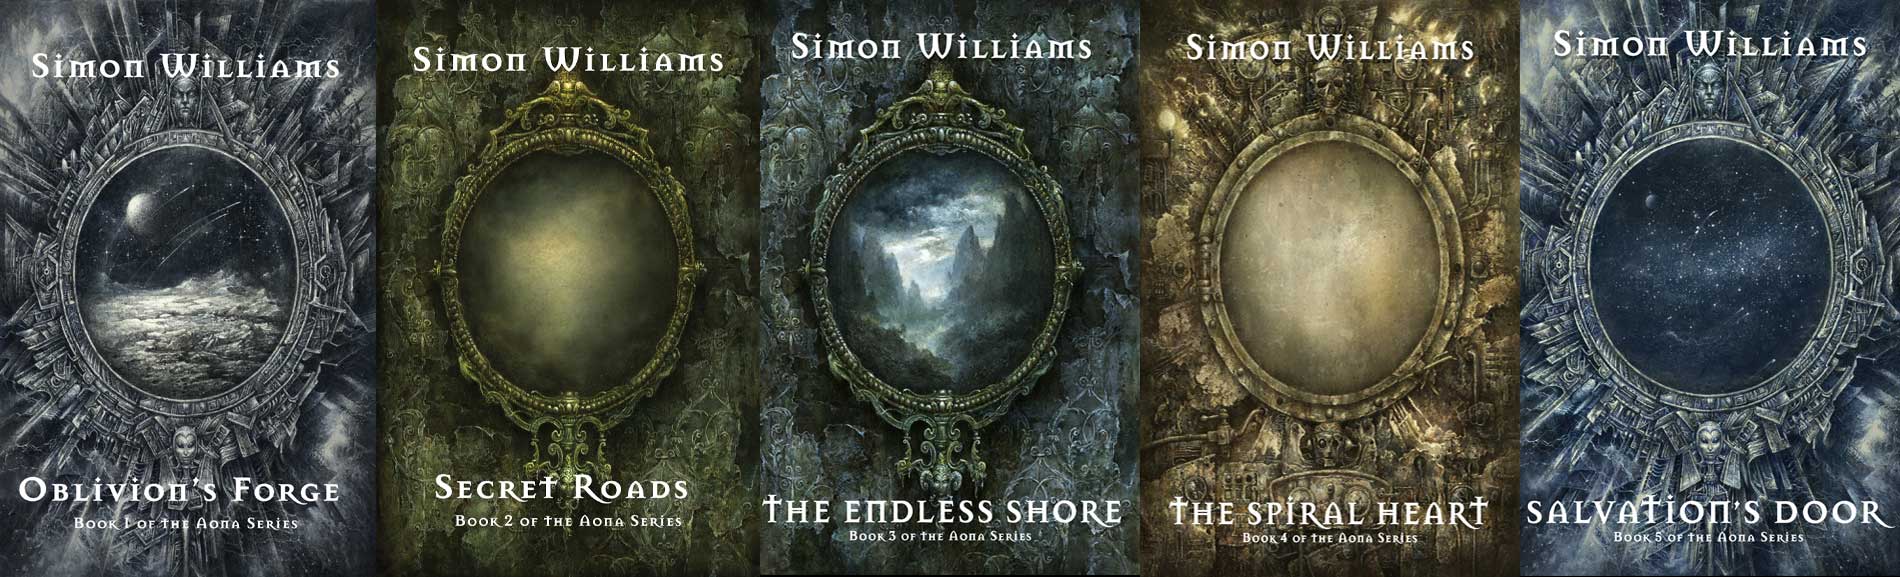 Simon Williams - Author of Dark Fantasy